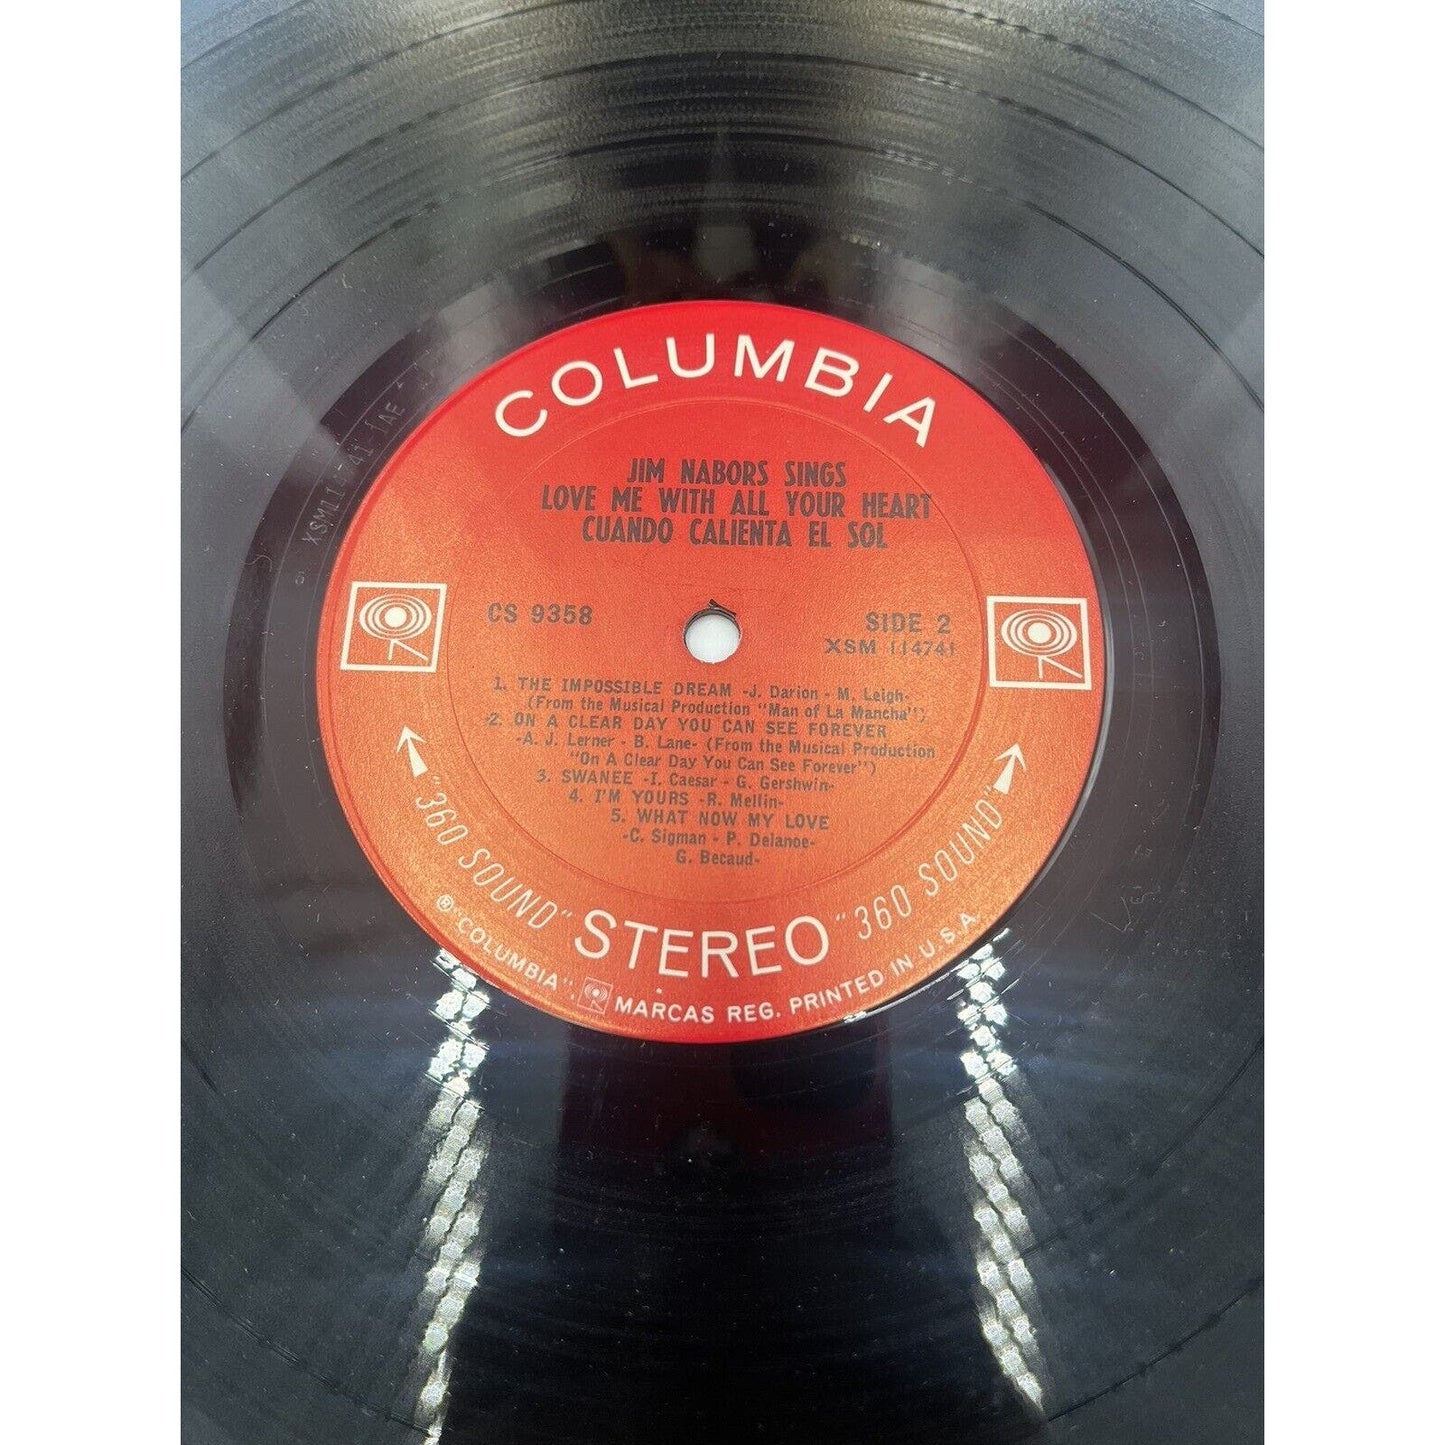 Jim Nabors "Jim Nabors Sings" Vinyl - Columbia Records CL 2558